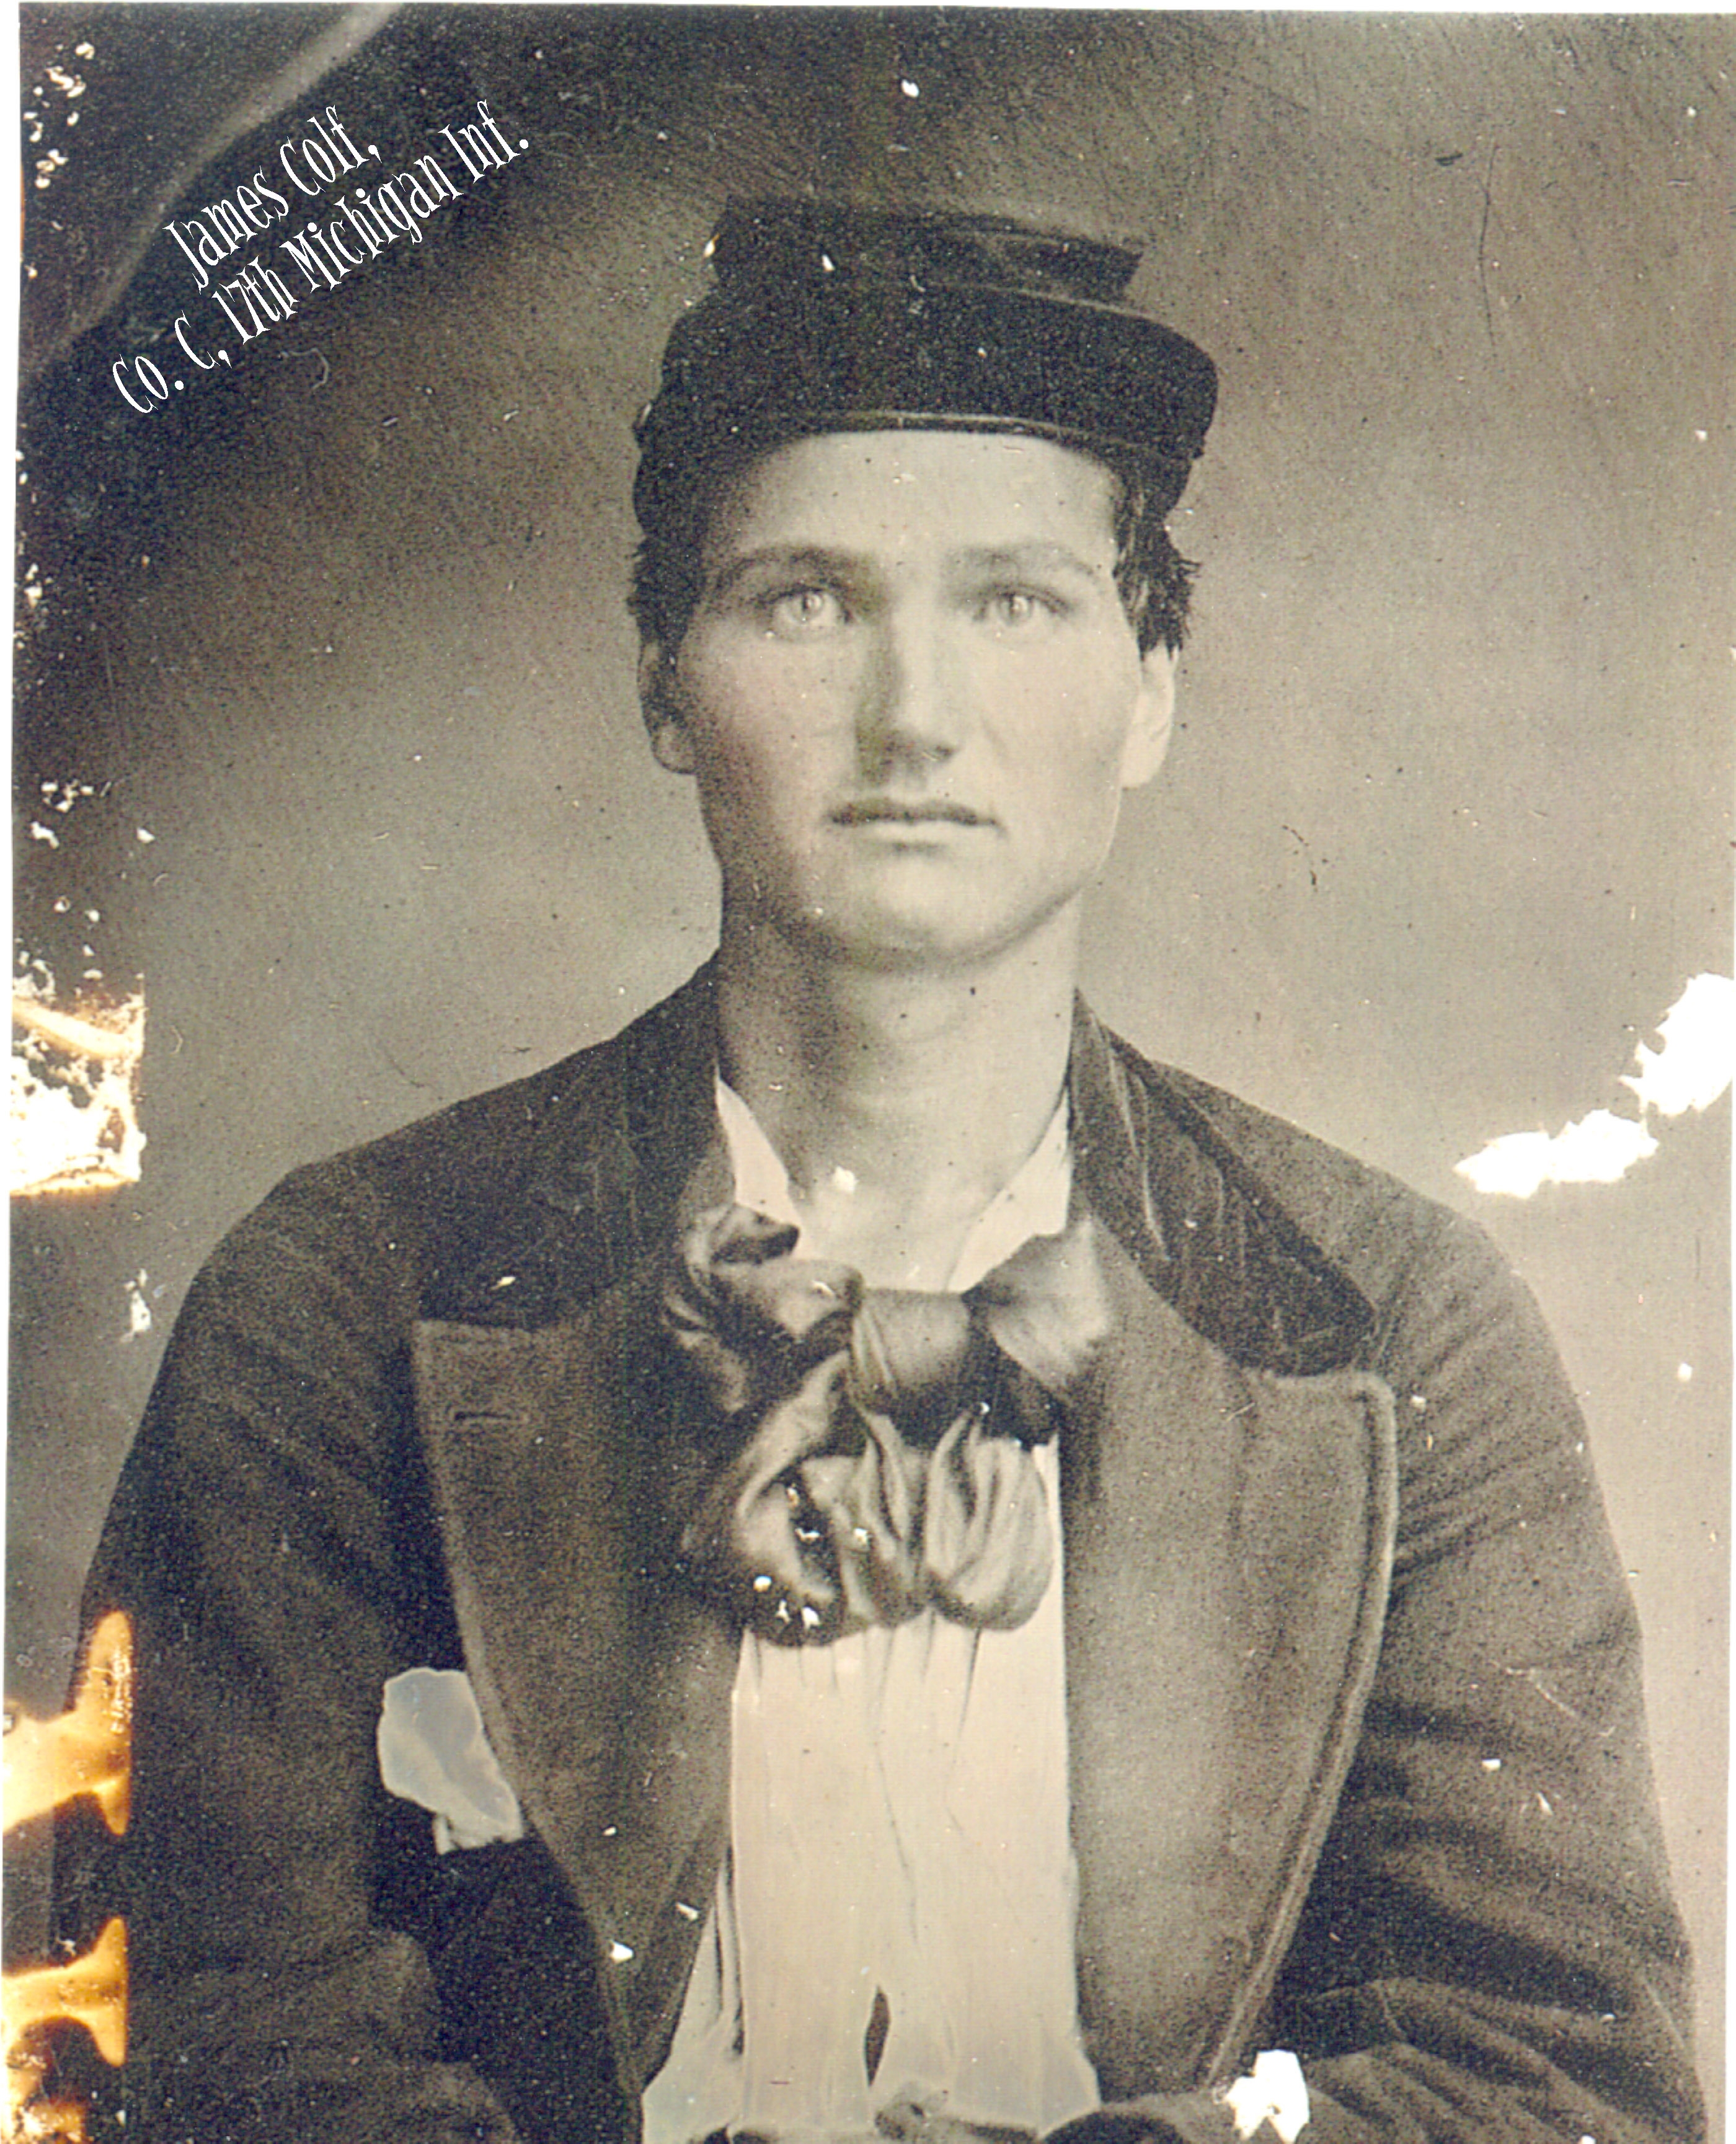 James Colf, Co. C, 17th Michigan Inf.